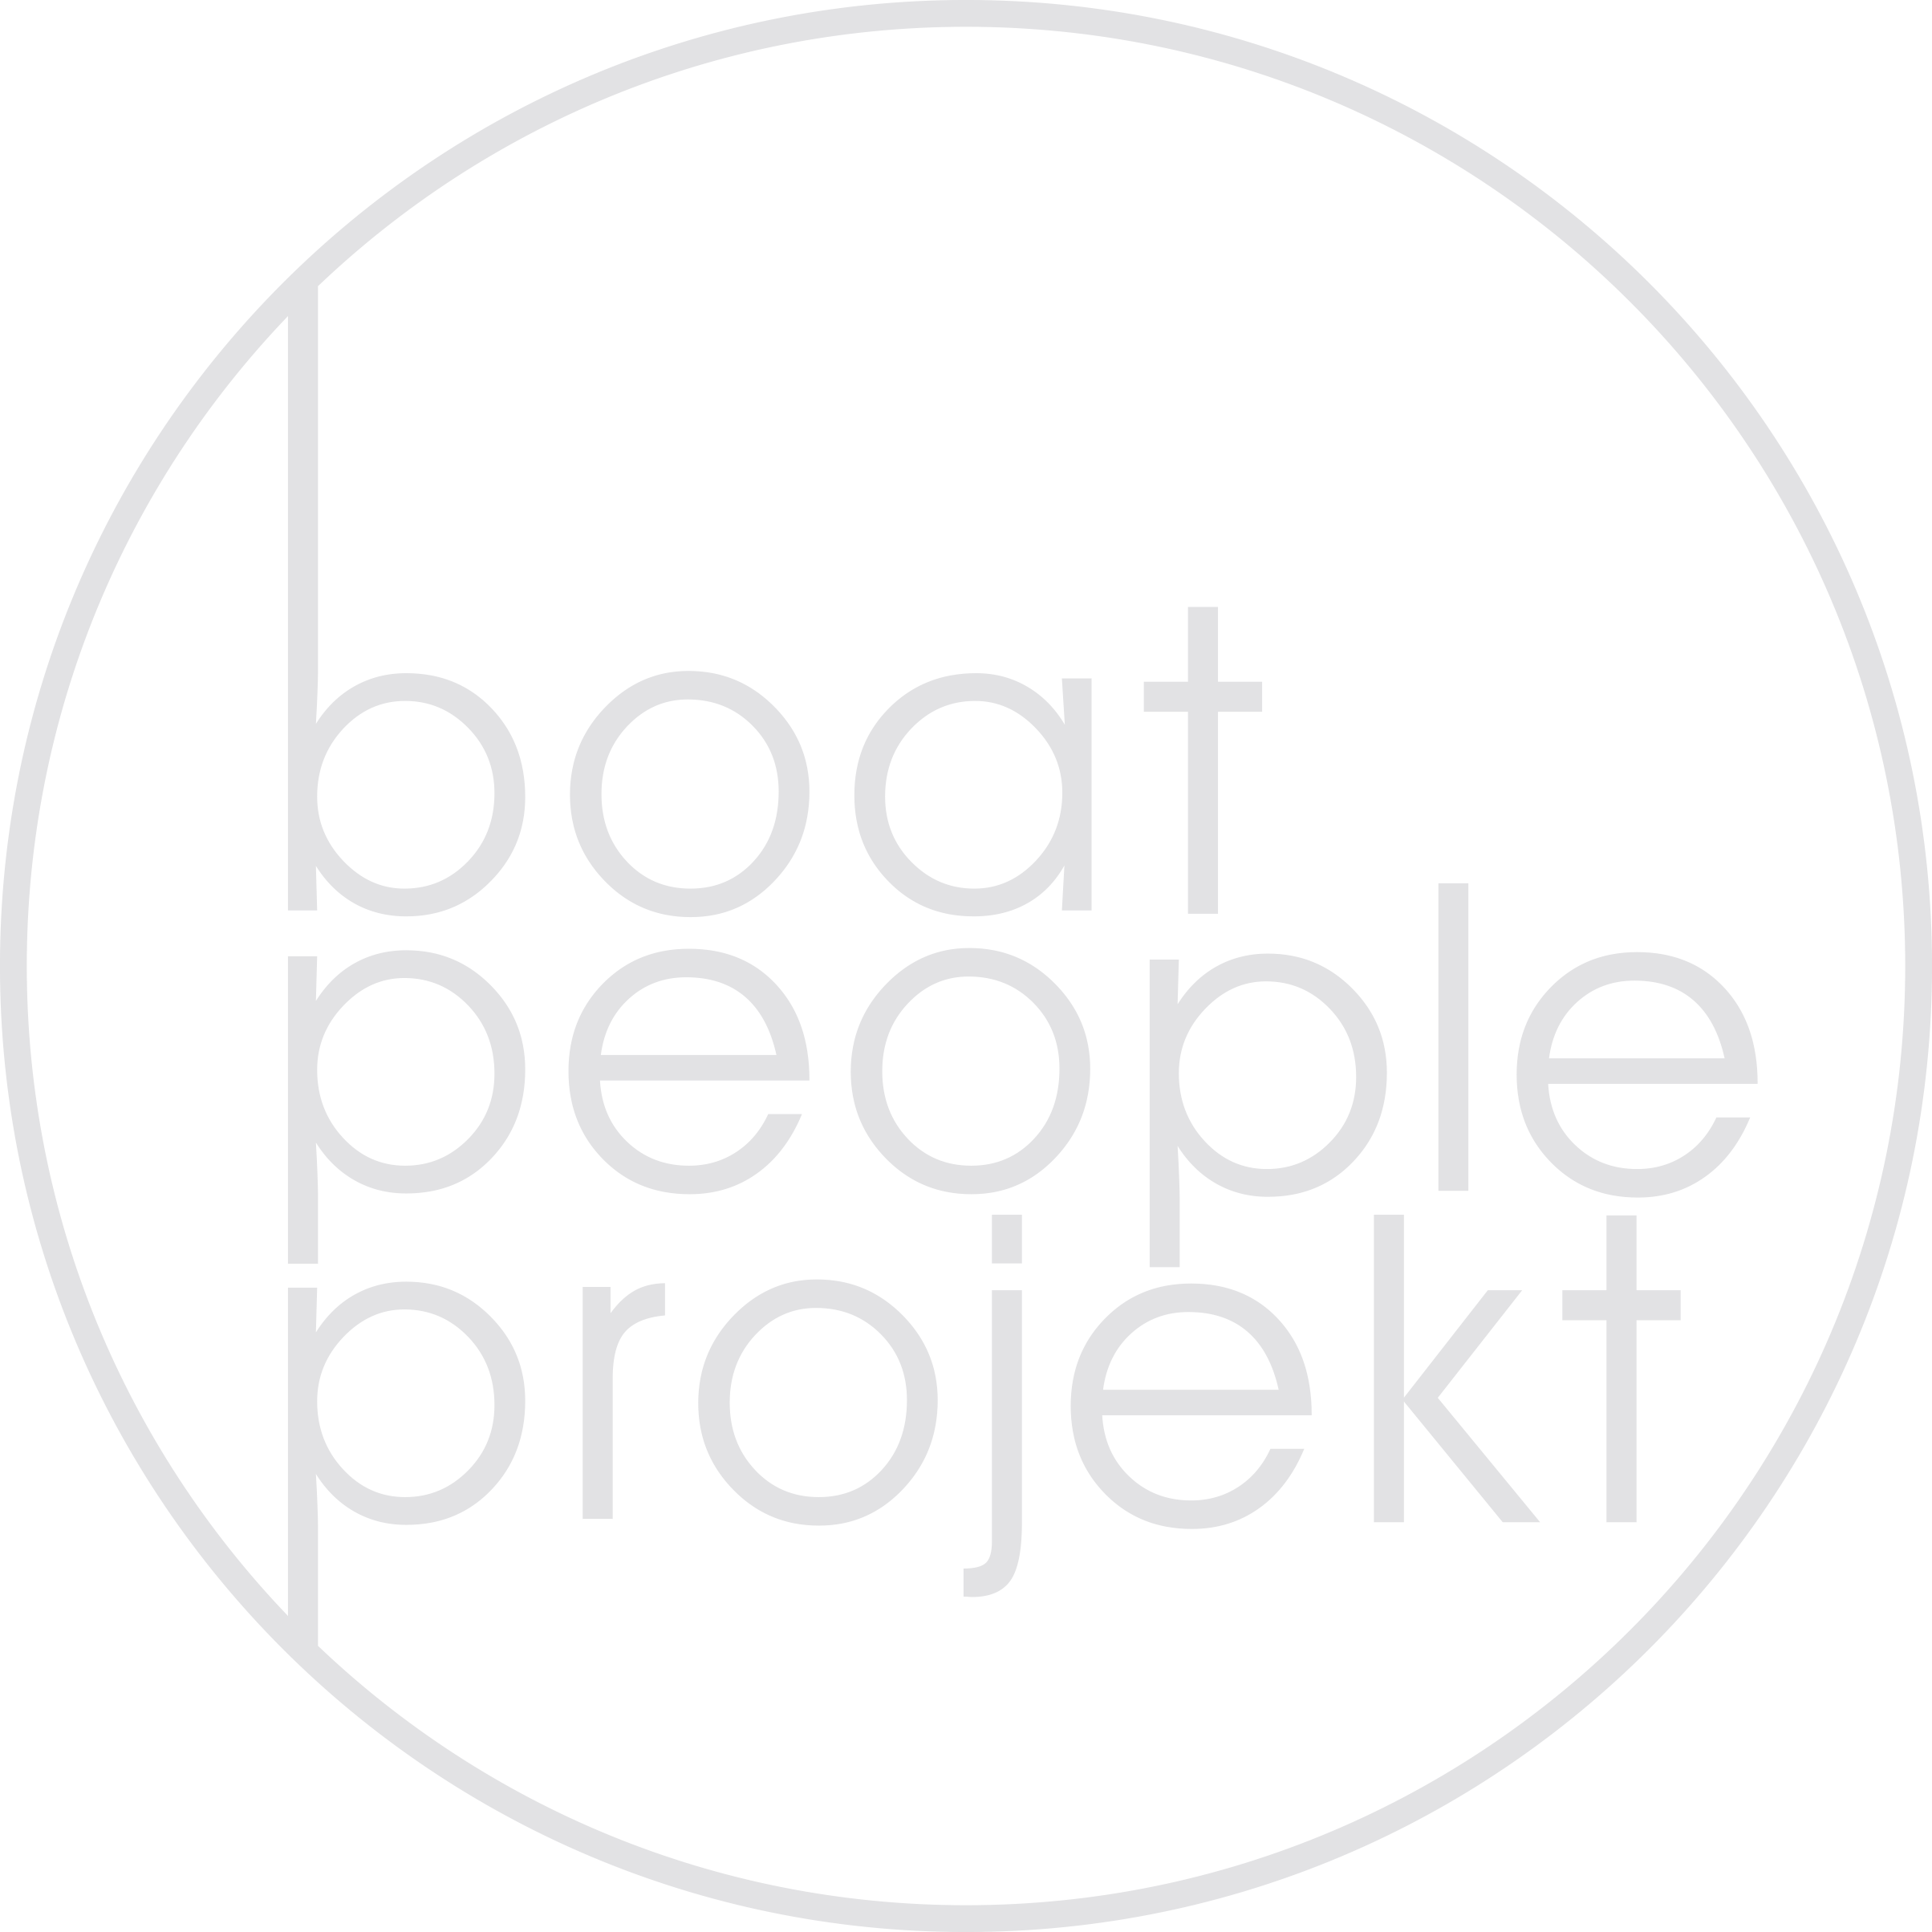 Barcamp Boatpeople